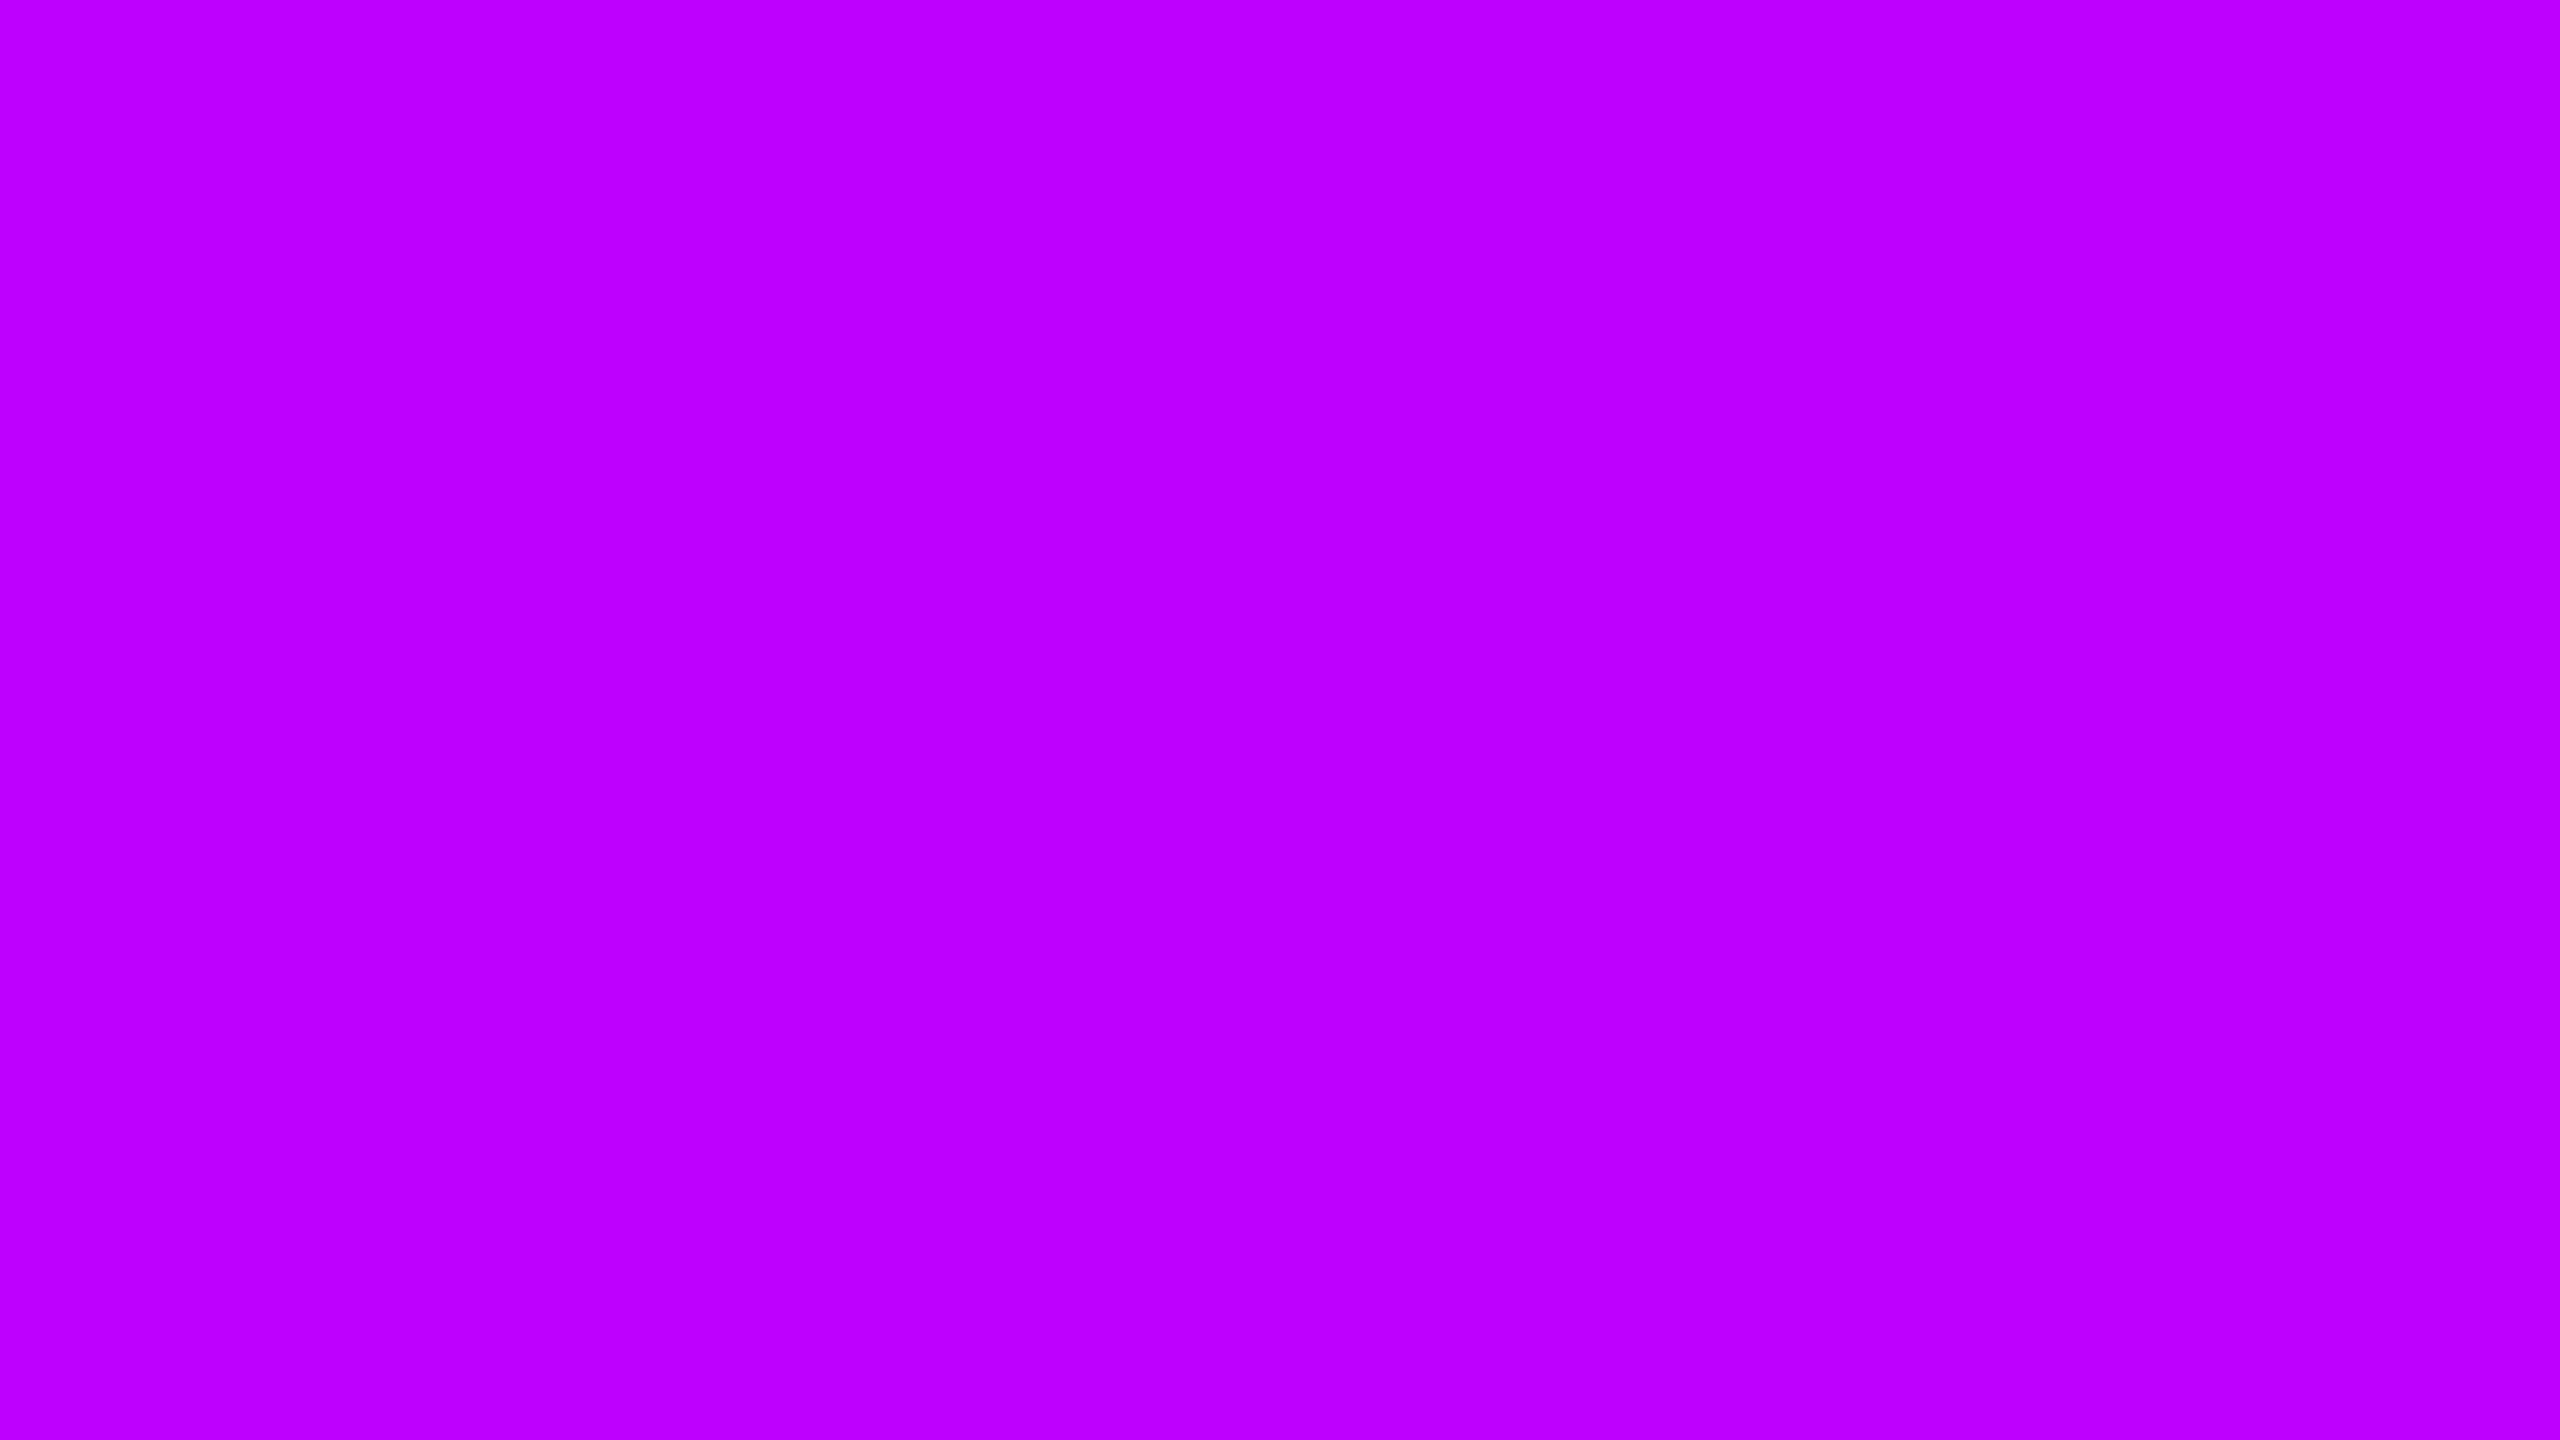 Solid Purple Wallpaper 2560x1440